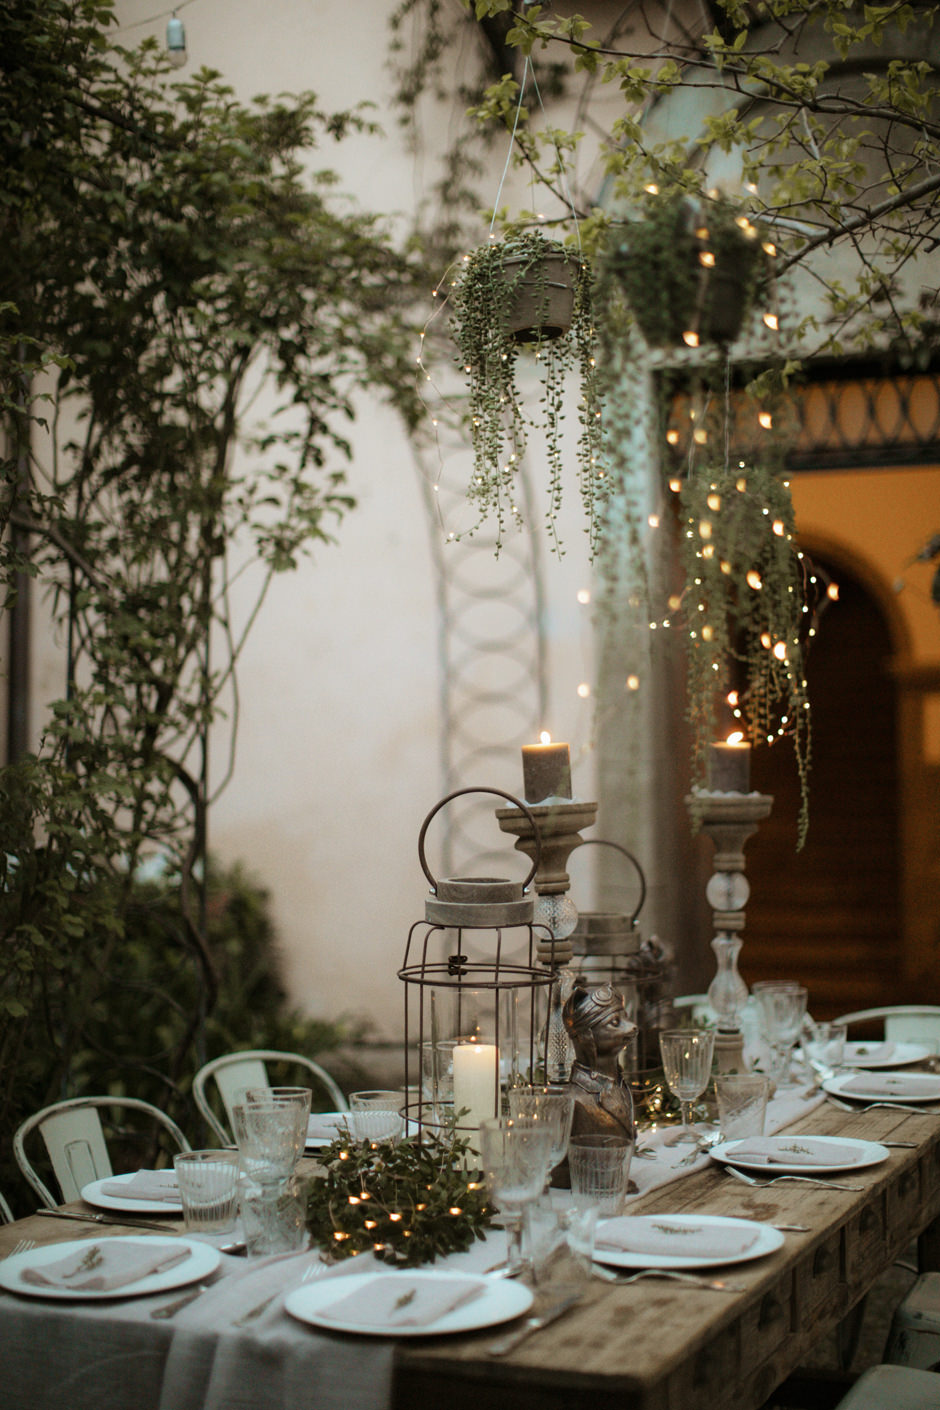 Wedding Dinner setups at Antica Dimora del Gruccione
Recommended wedding Venues in Sardinia